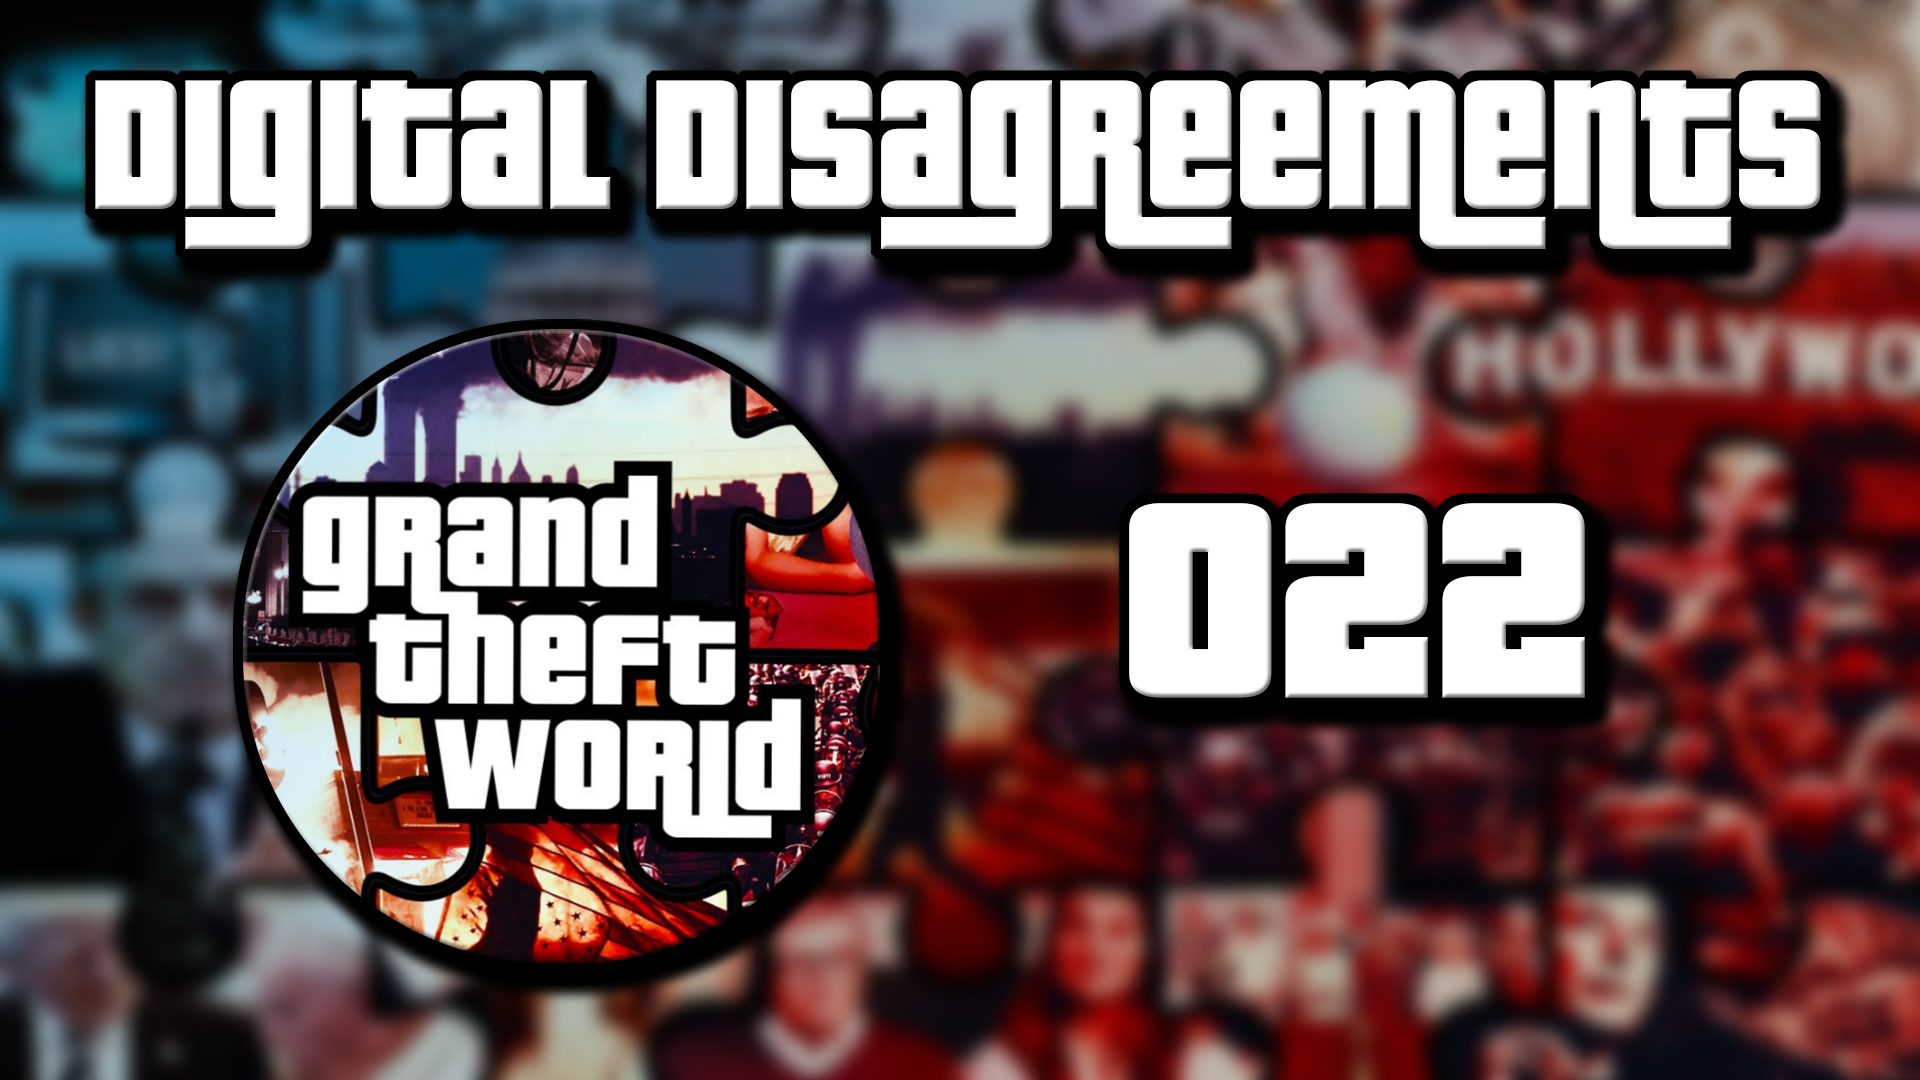 Grand Theft World Podcast 022 | Digital Disagreements